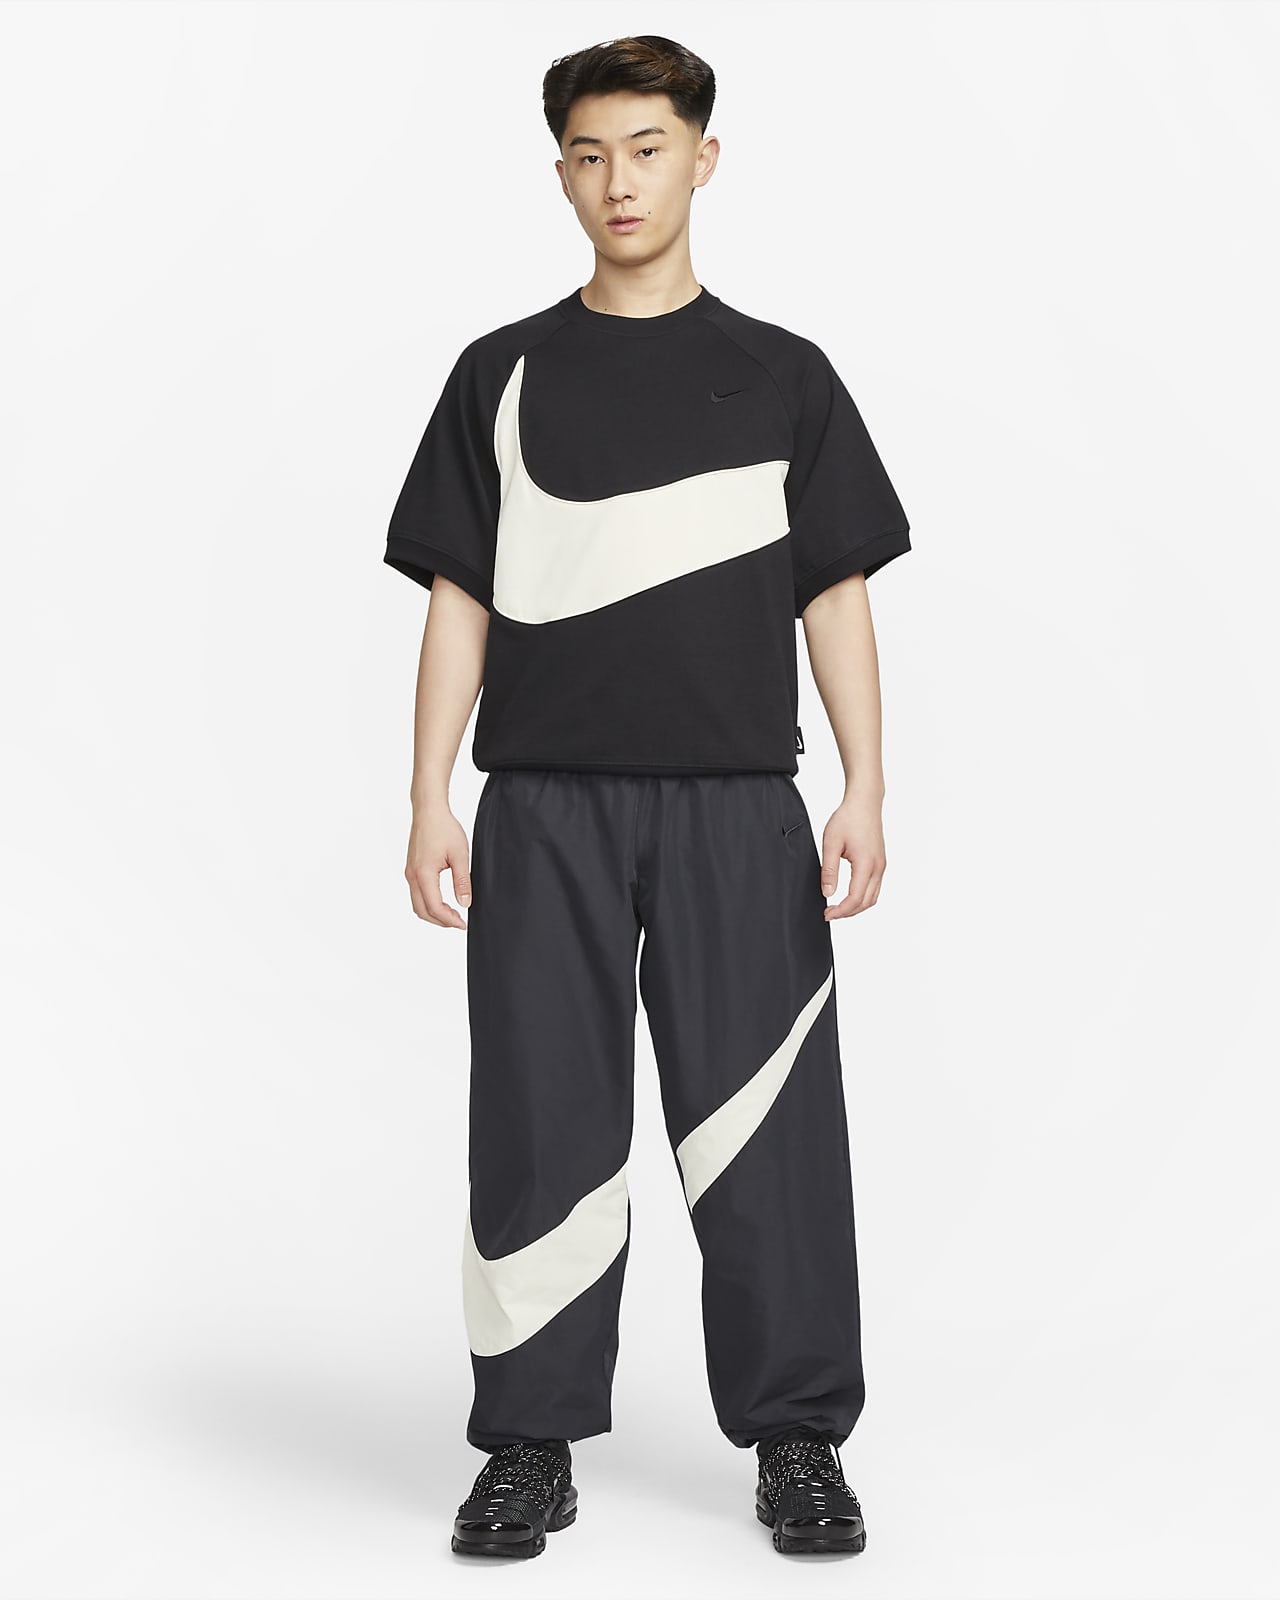 T-Shirt Nike Sportswear Swoosh Homem DA0978-104